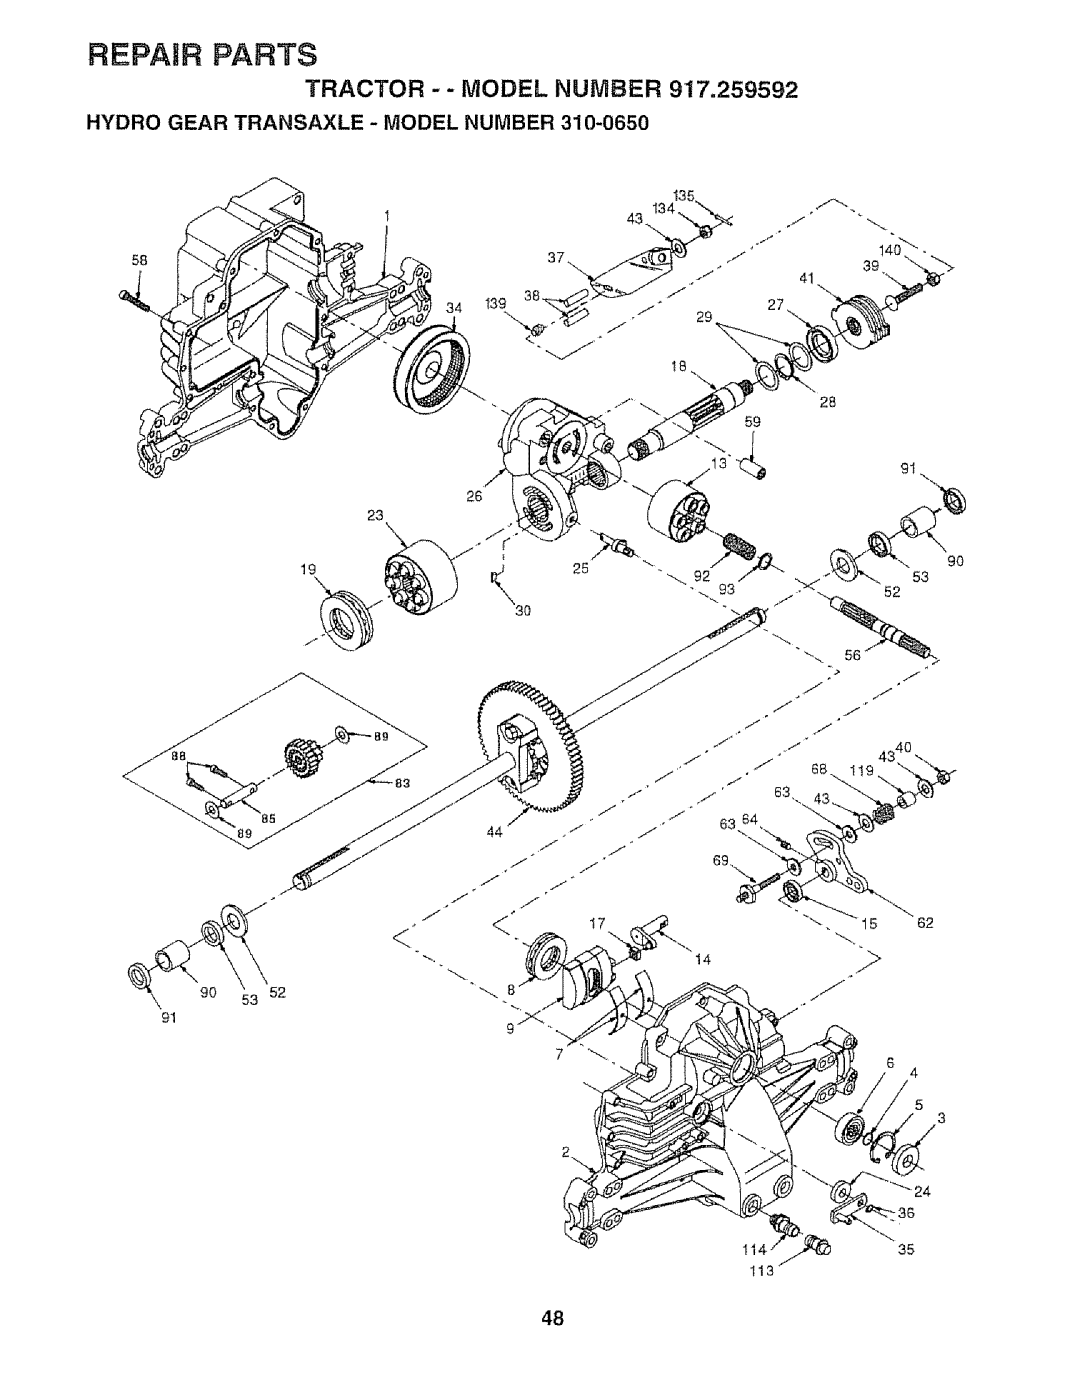 Craftsman 917.259592 owner manual Hydro Gear Transaxle - Model Number, Repair Parts, Tractor - - Model Number 